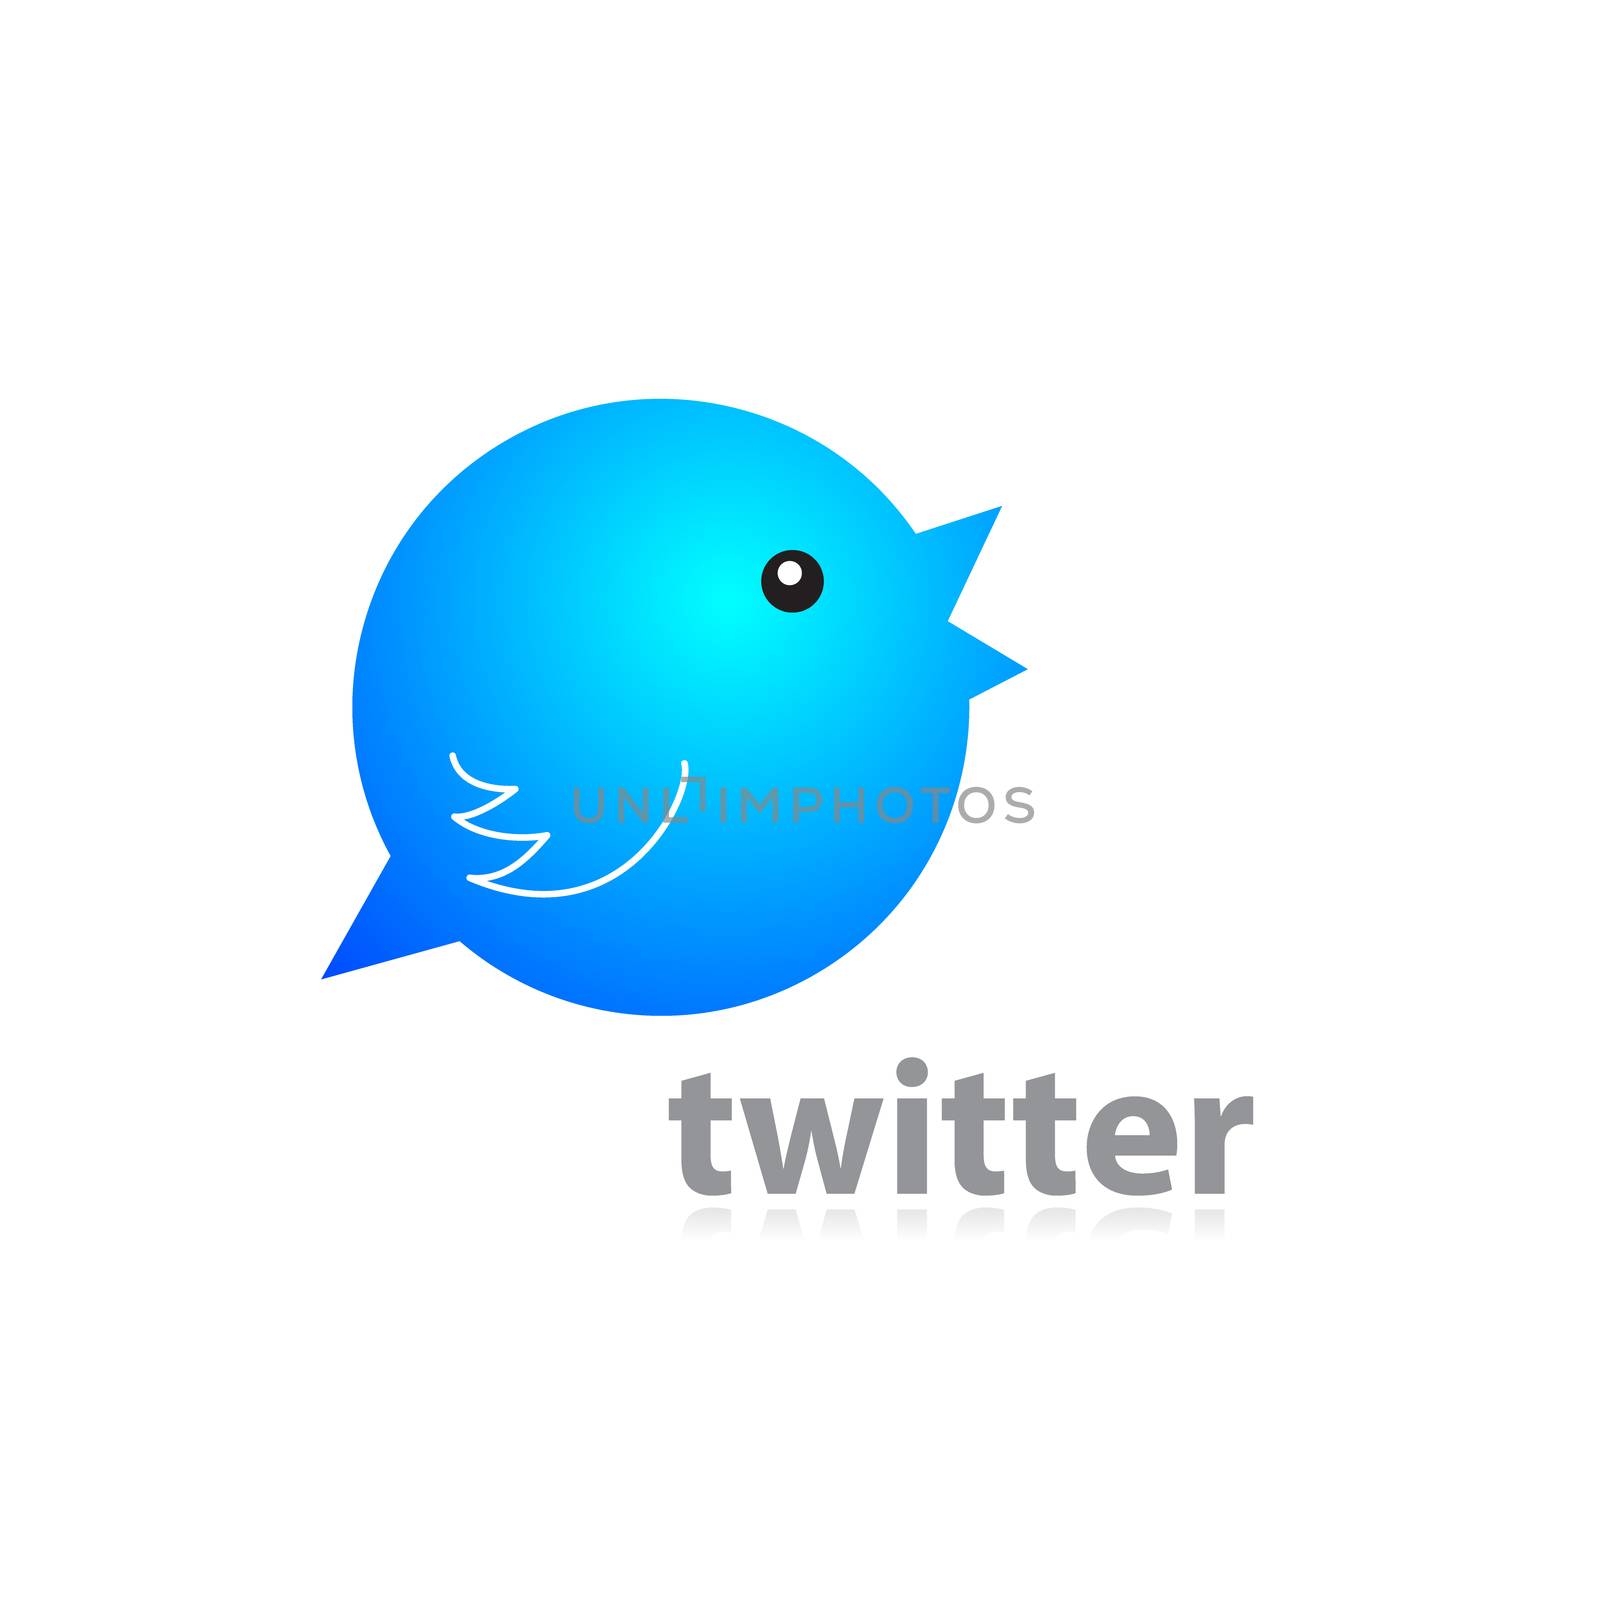 Stylized sign of Twitter - the bird-speech-bubble.